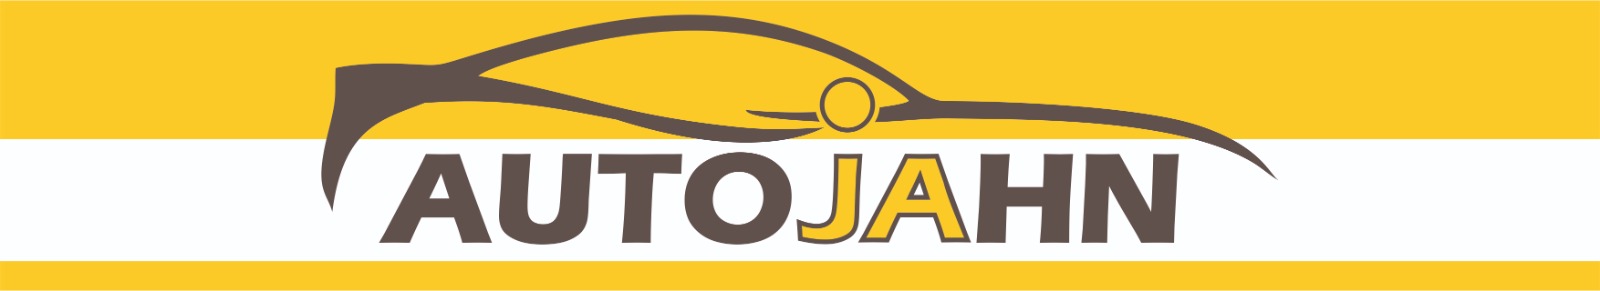 Automobile Jahn GmbH : Brand Short Description Type Here.